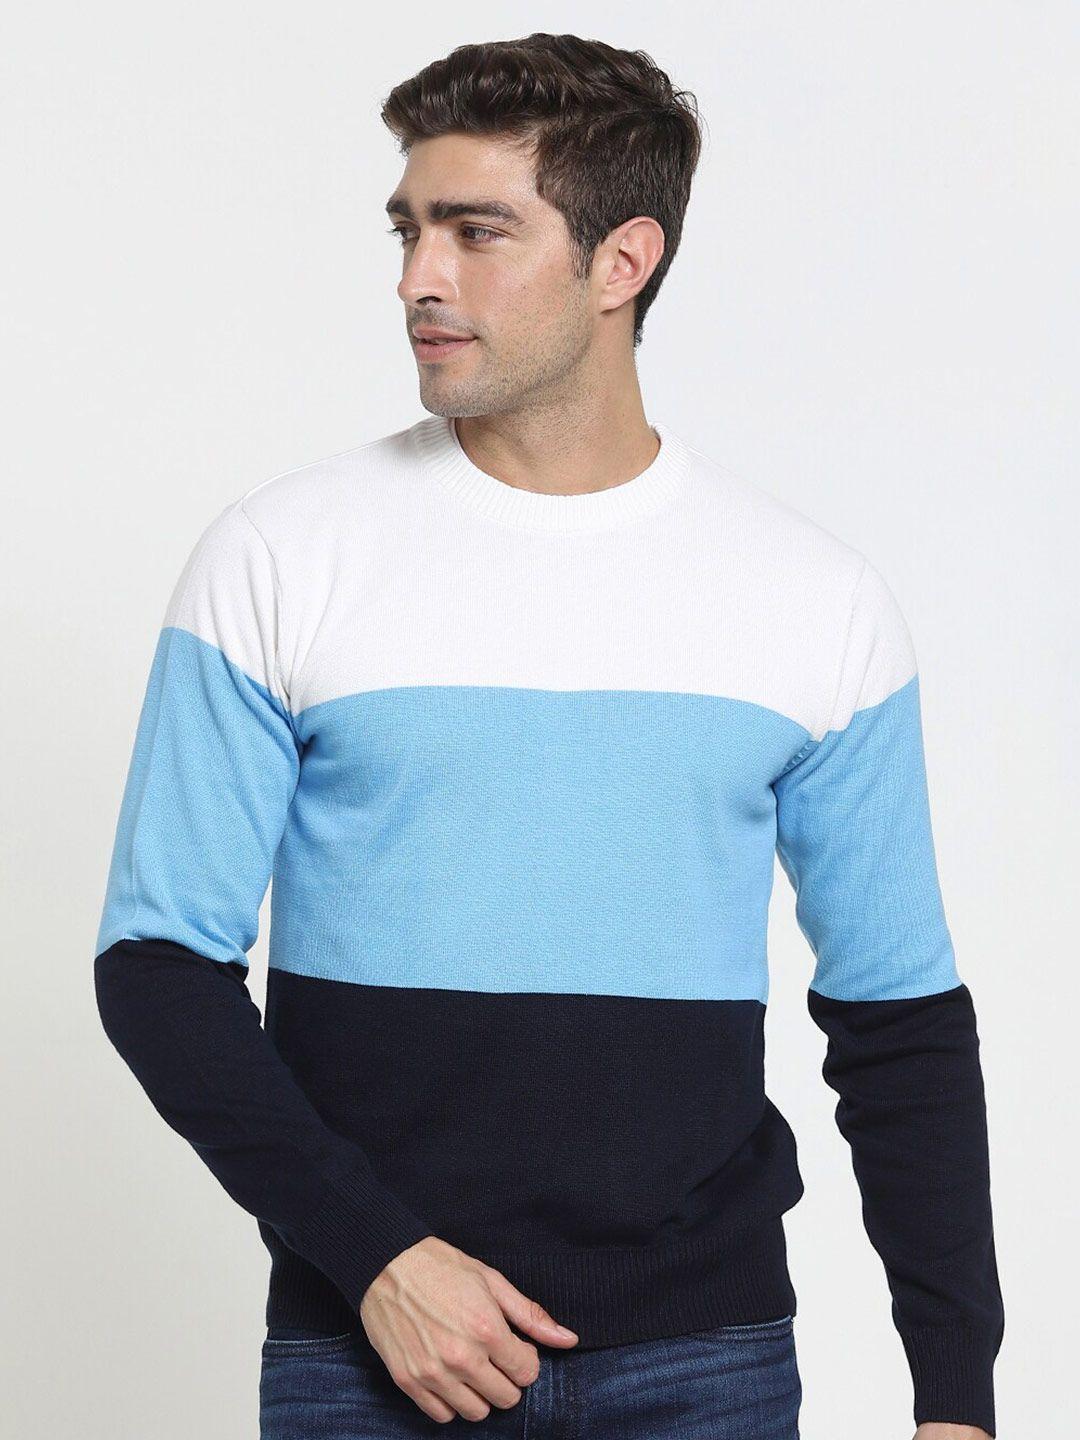 Bewakoof Men Blue & White Colourblocked Windsurfer Pullover Sweater